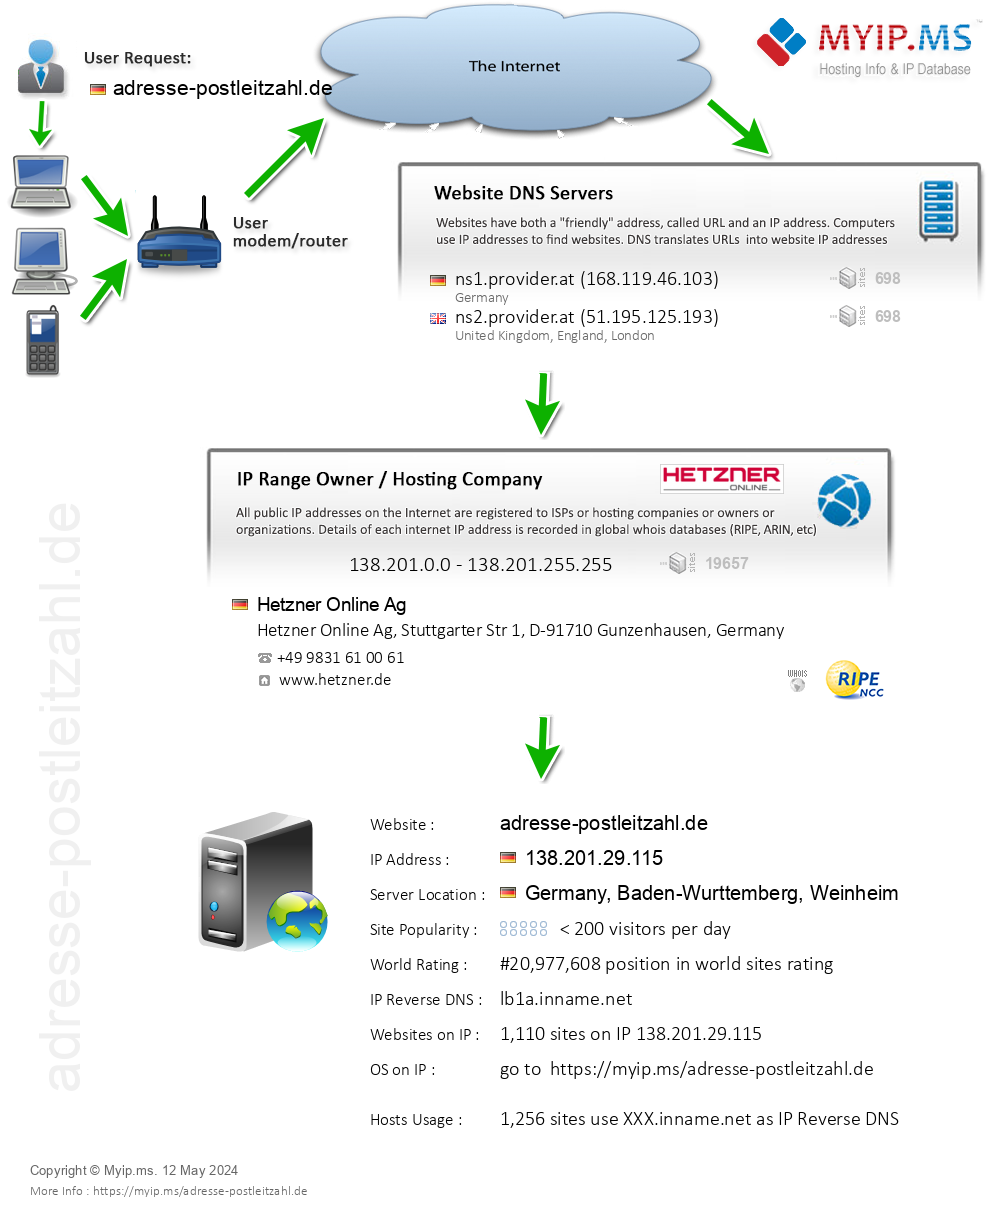 Adresse-postleitzahl.de - Website Hosting Visual IP Diagram